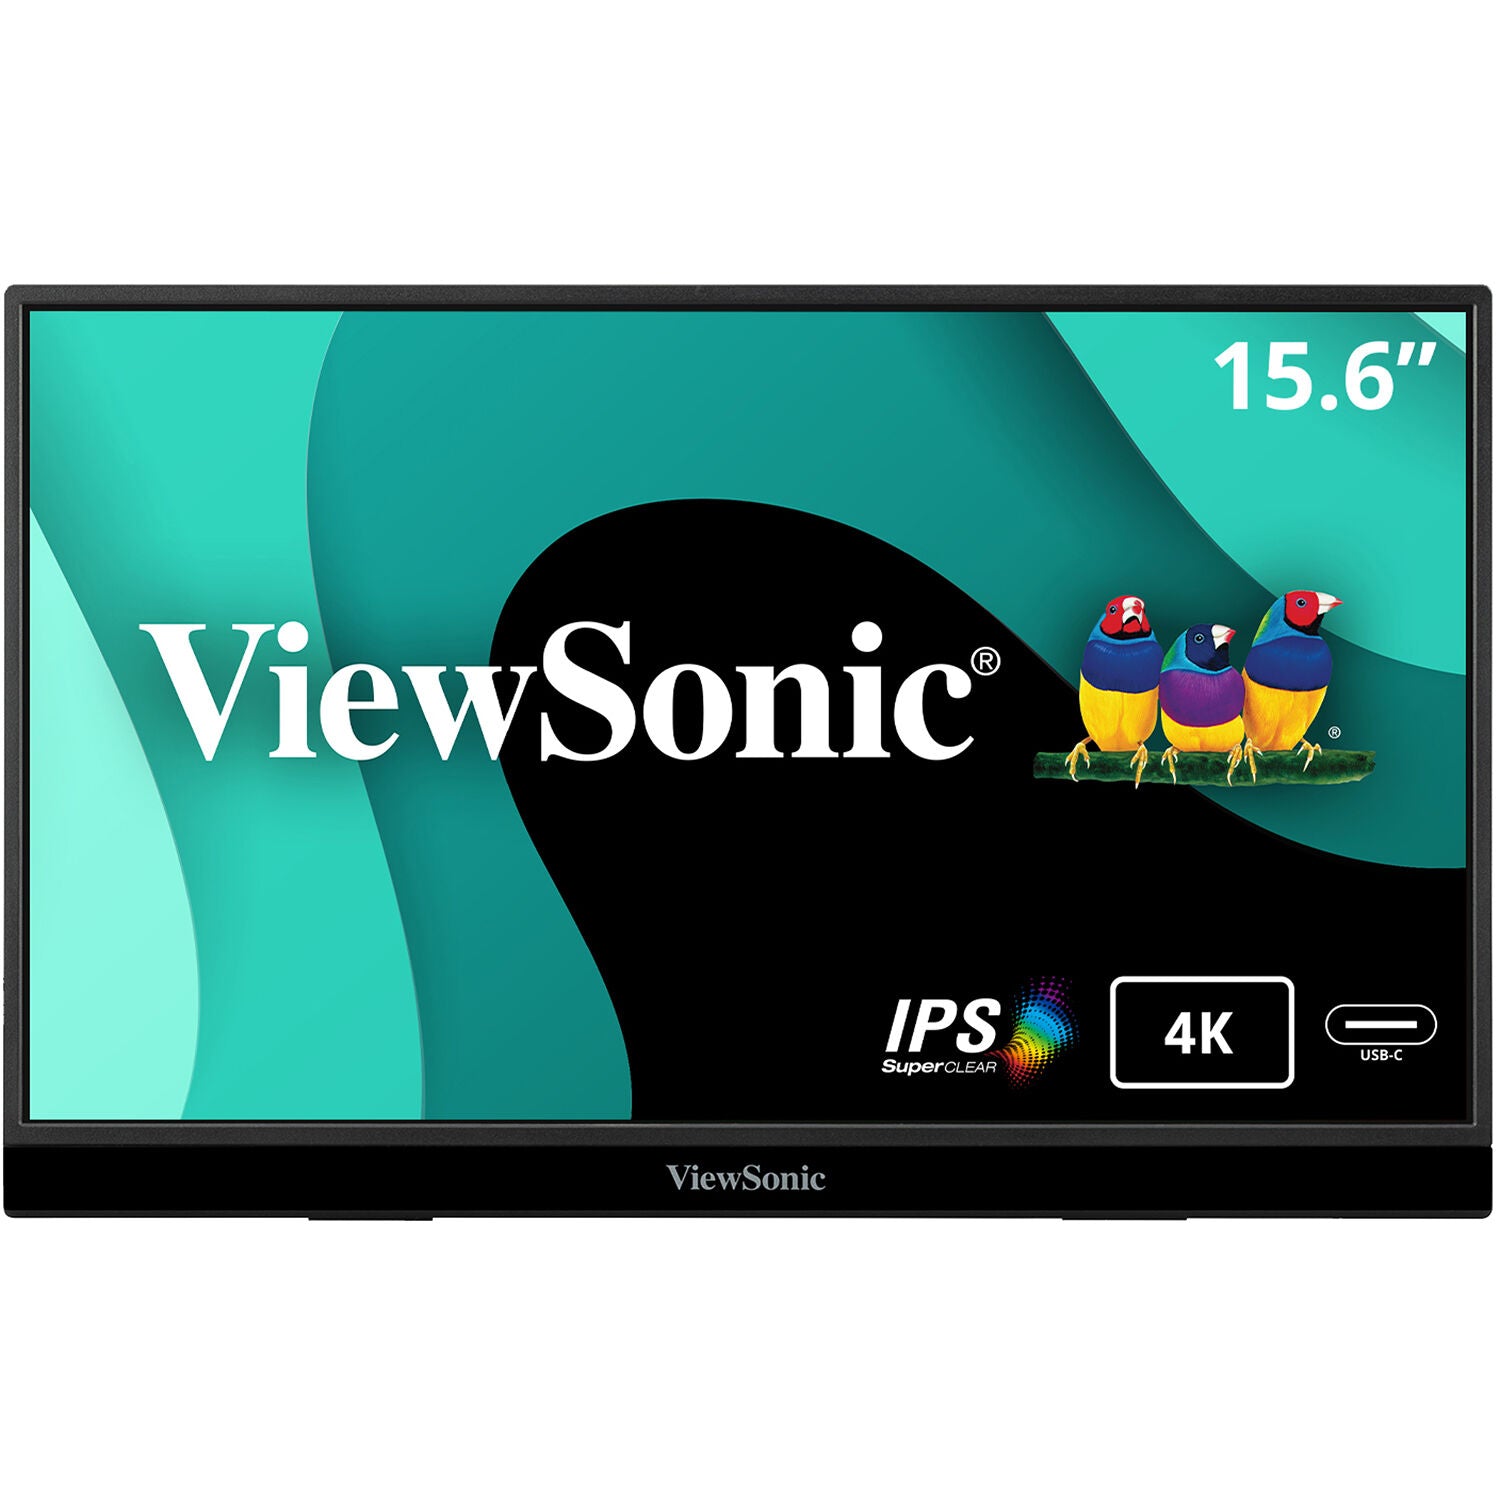 ViewSonic VX1655-4K-S 15.6" 4K UHD Portable LED IPS Monitor - Certified Refurbished